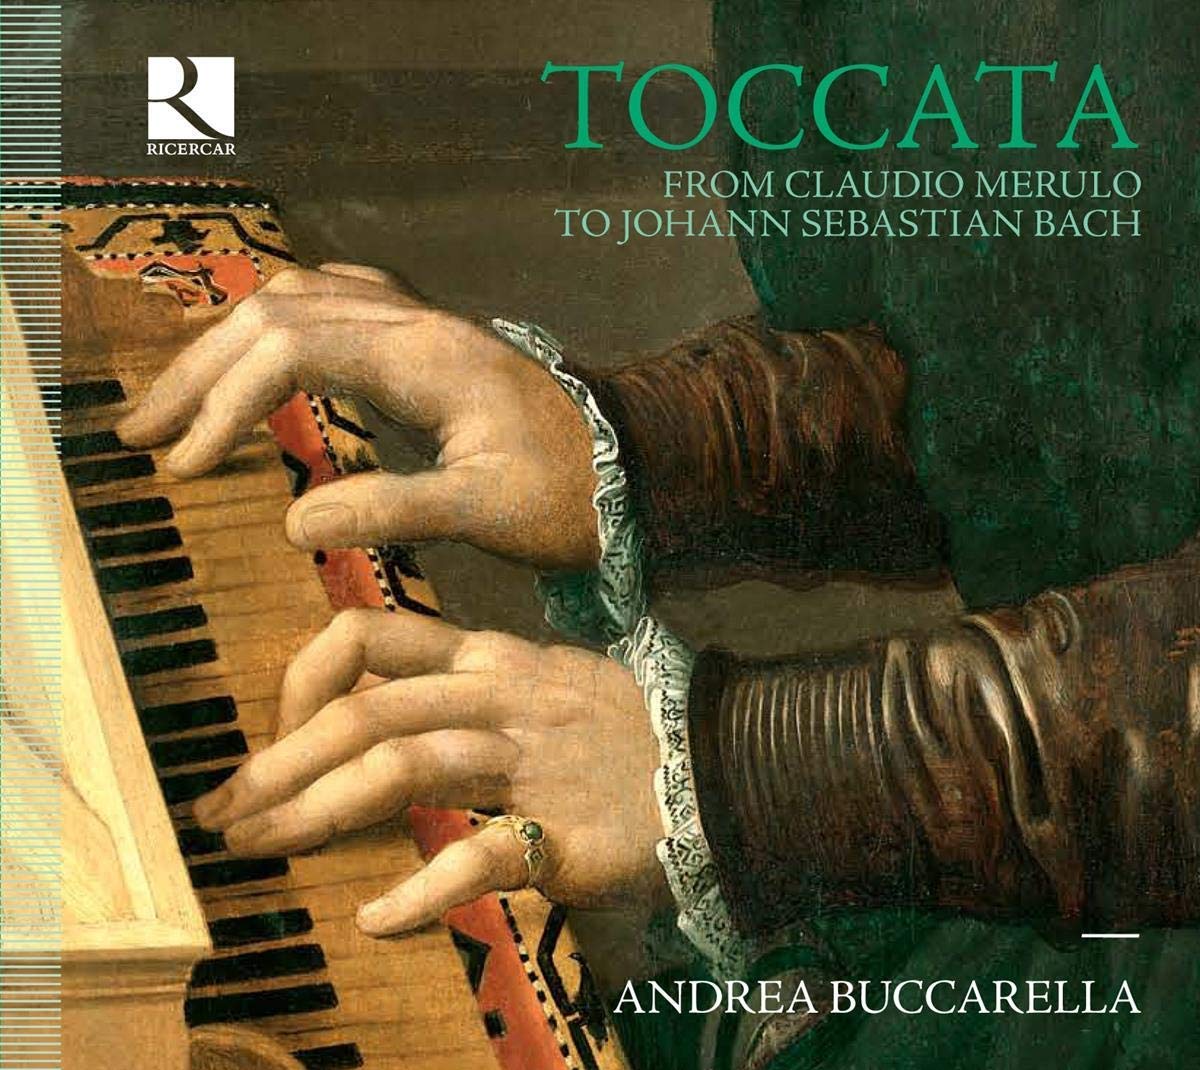 CD cover of Buccarella recording